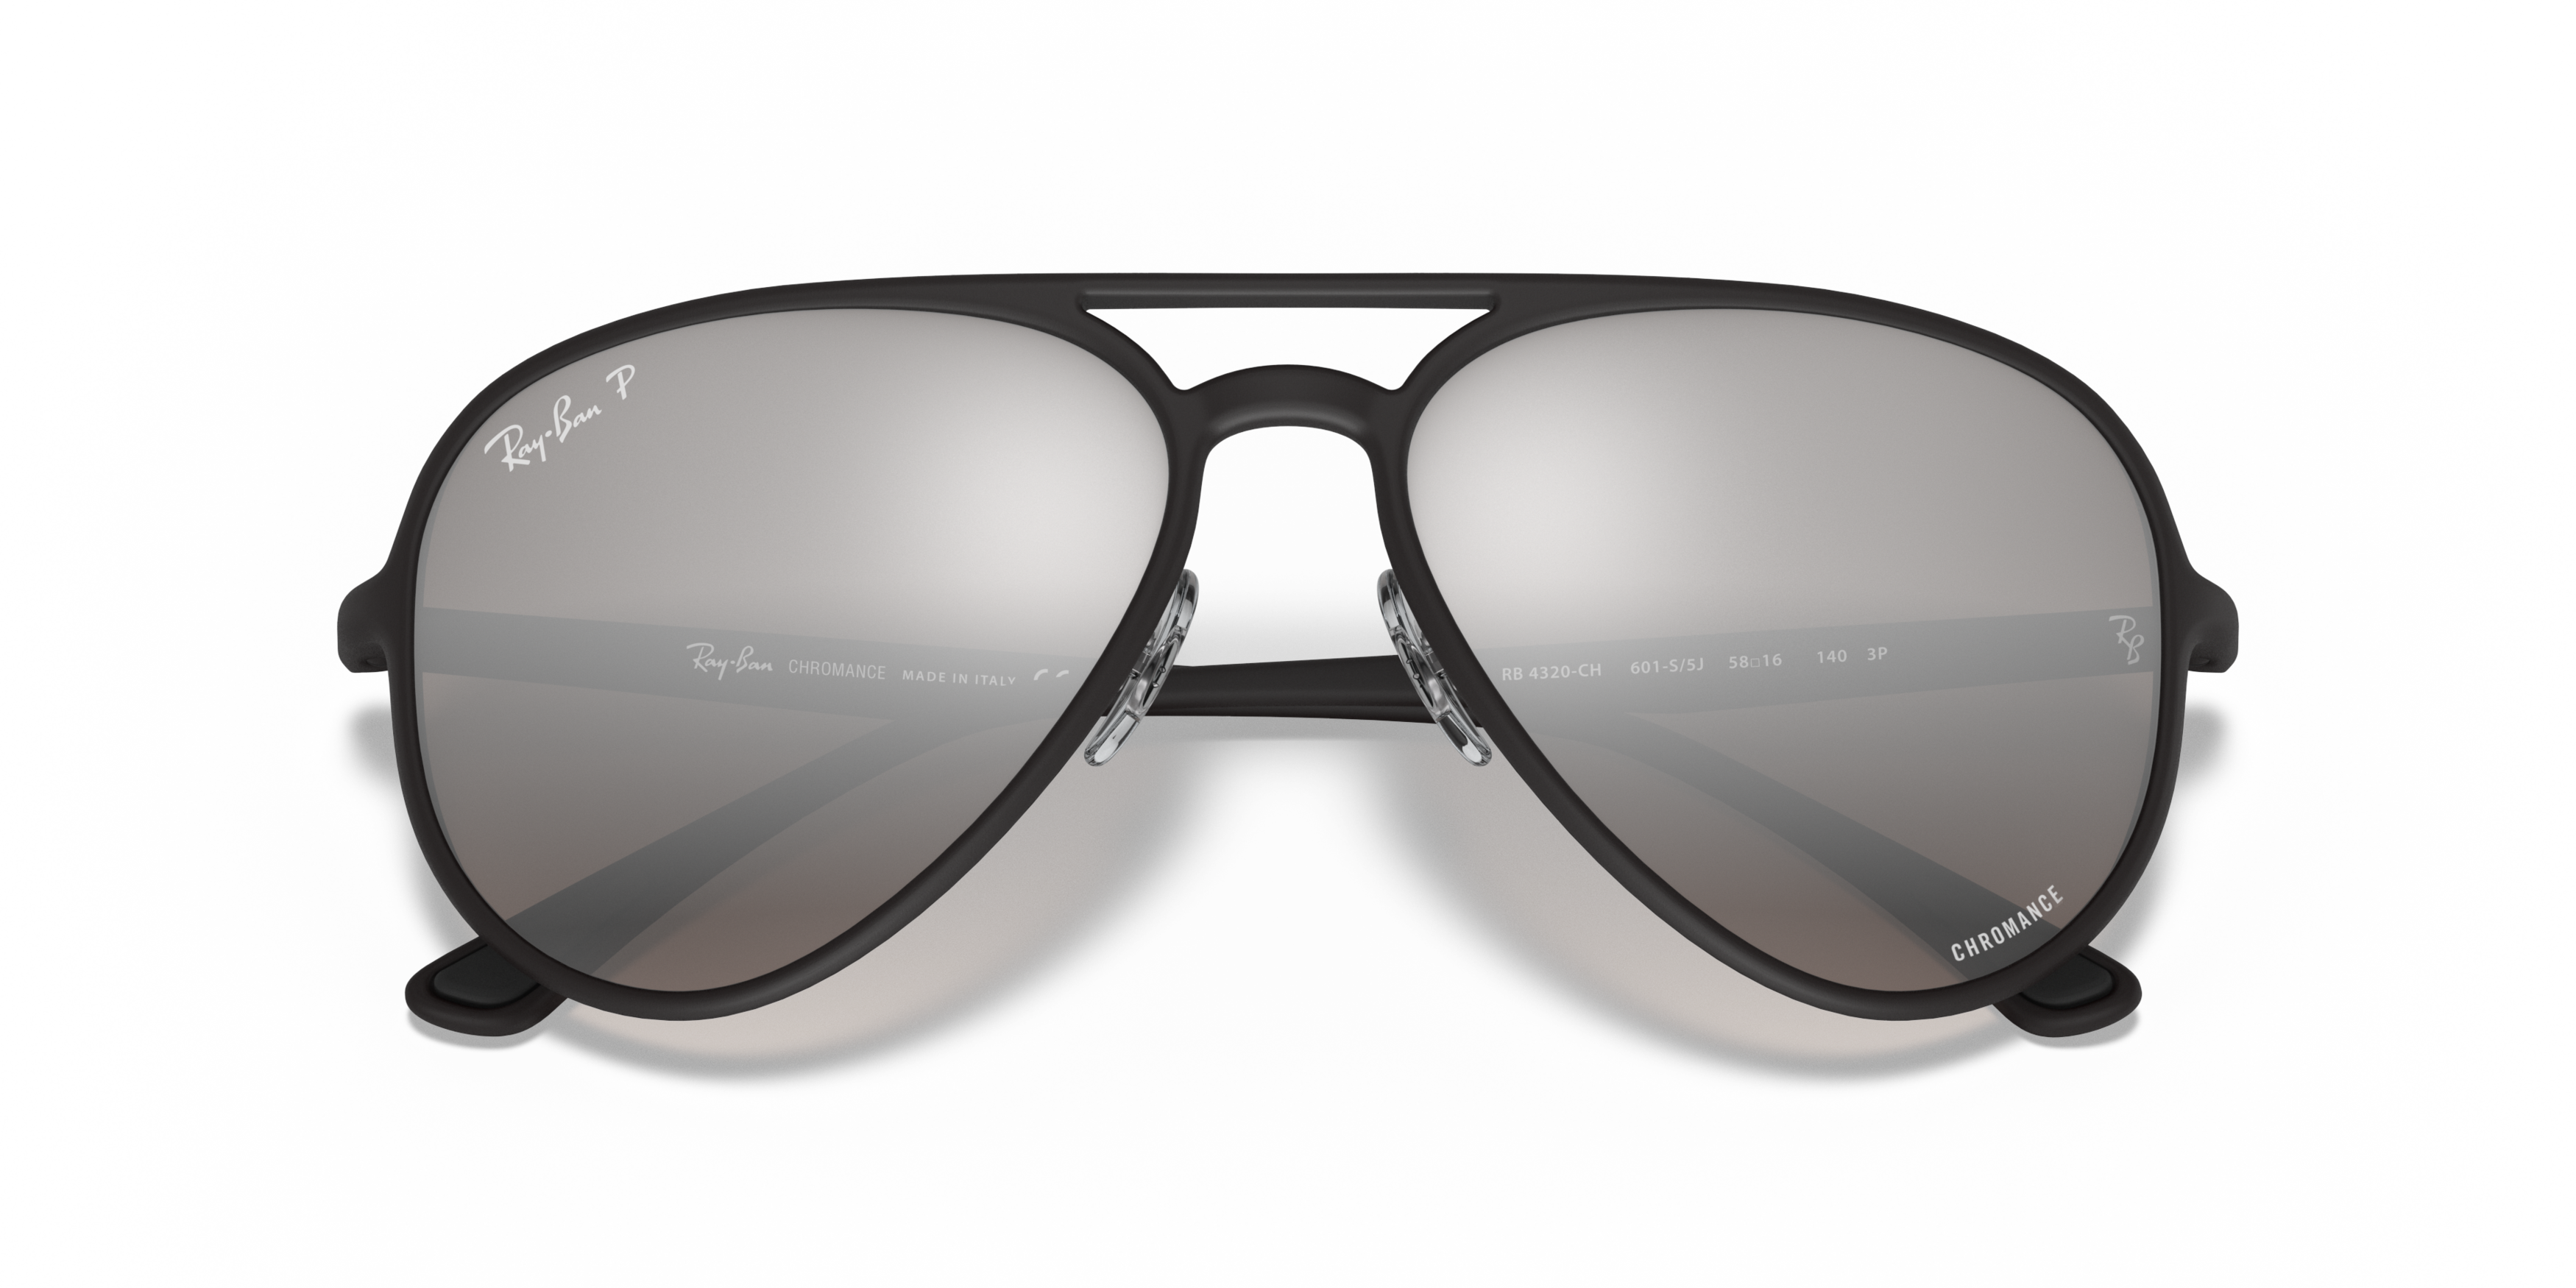 Folded Ray-Ban RB 4320CH (601S5J) Sunglasses Grey / Black